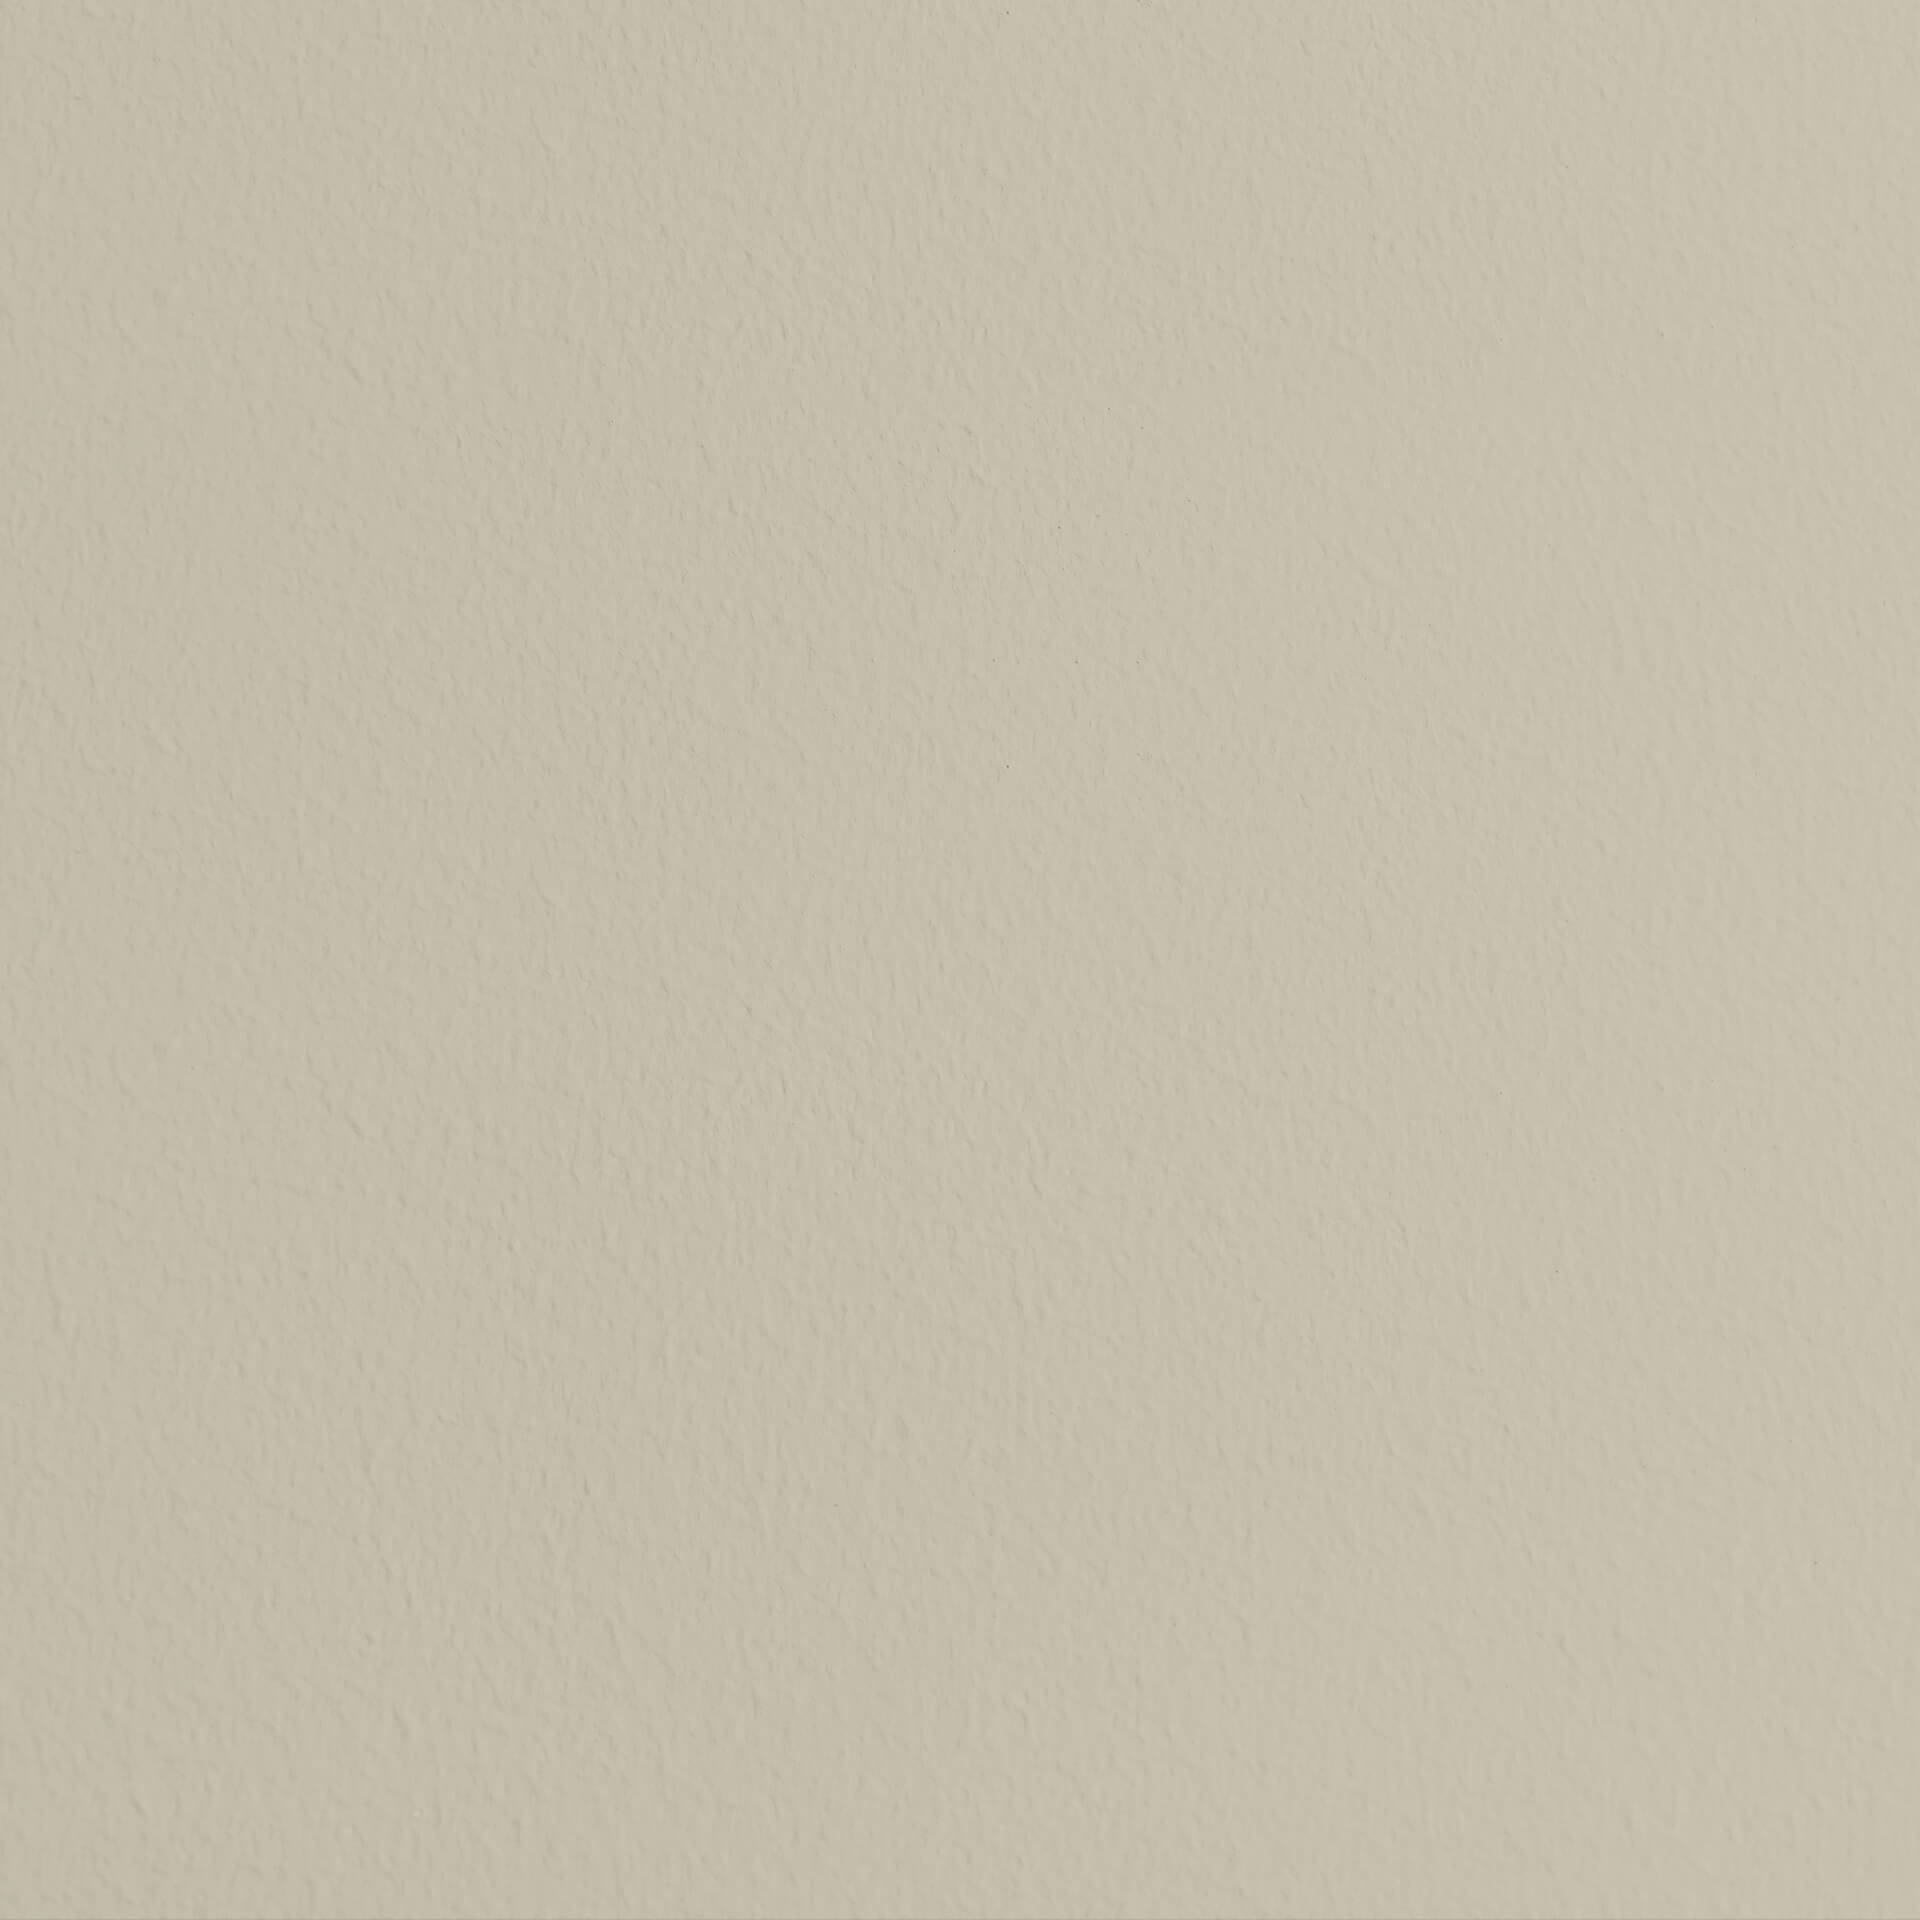 Mylands Flanders Grey No. 110 - Marble Matt Emulsion / Wandfarbe, 2.5L